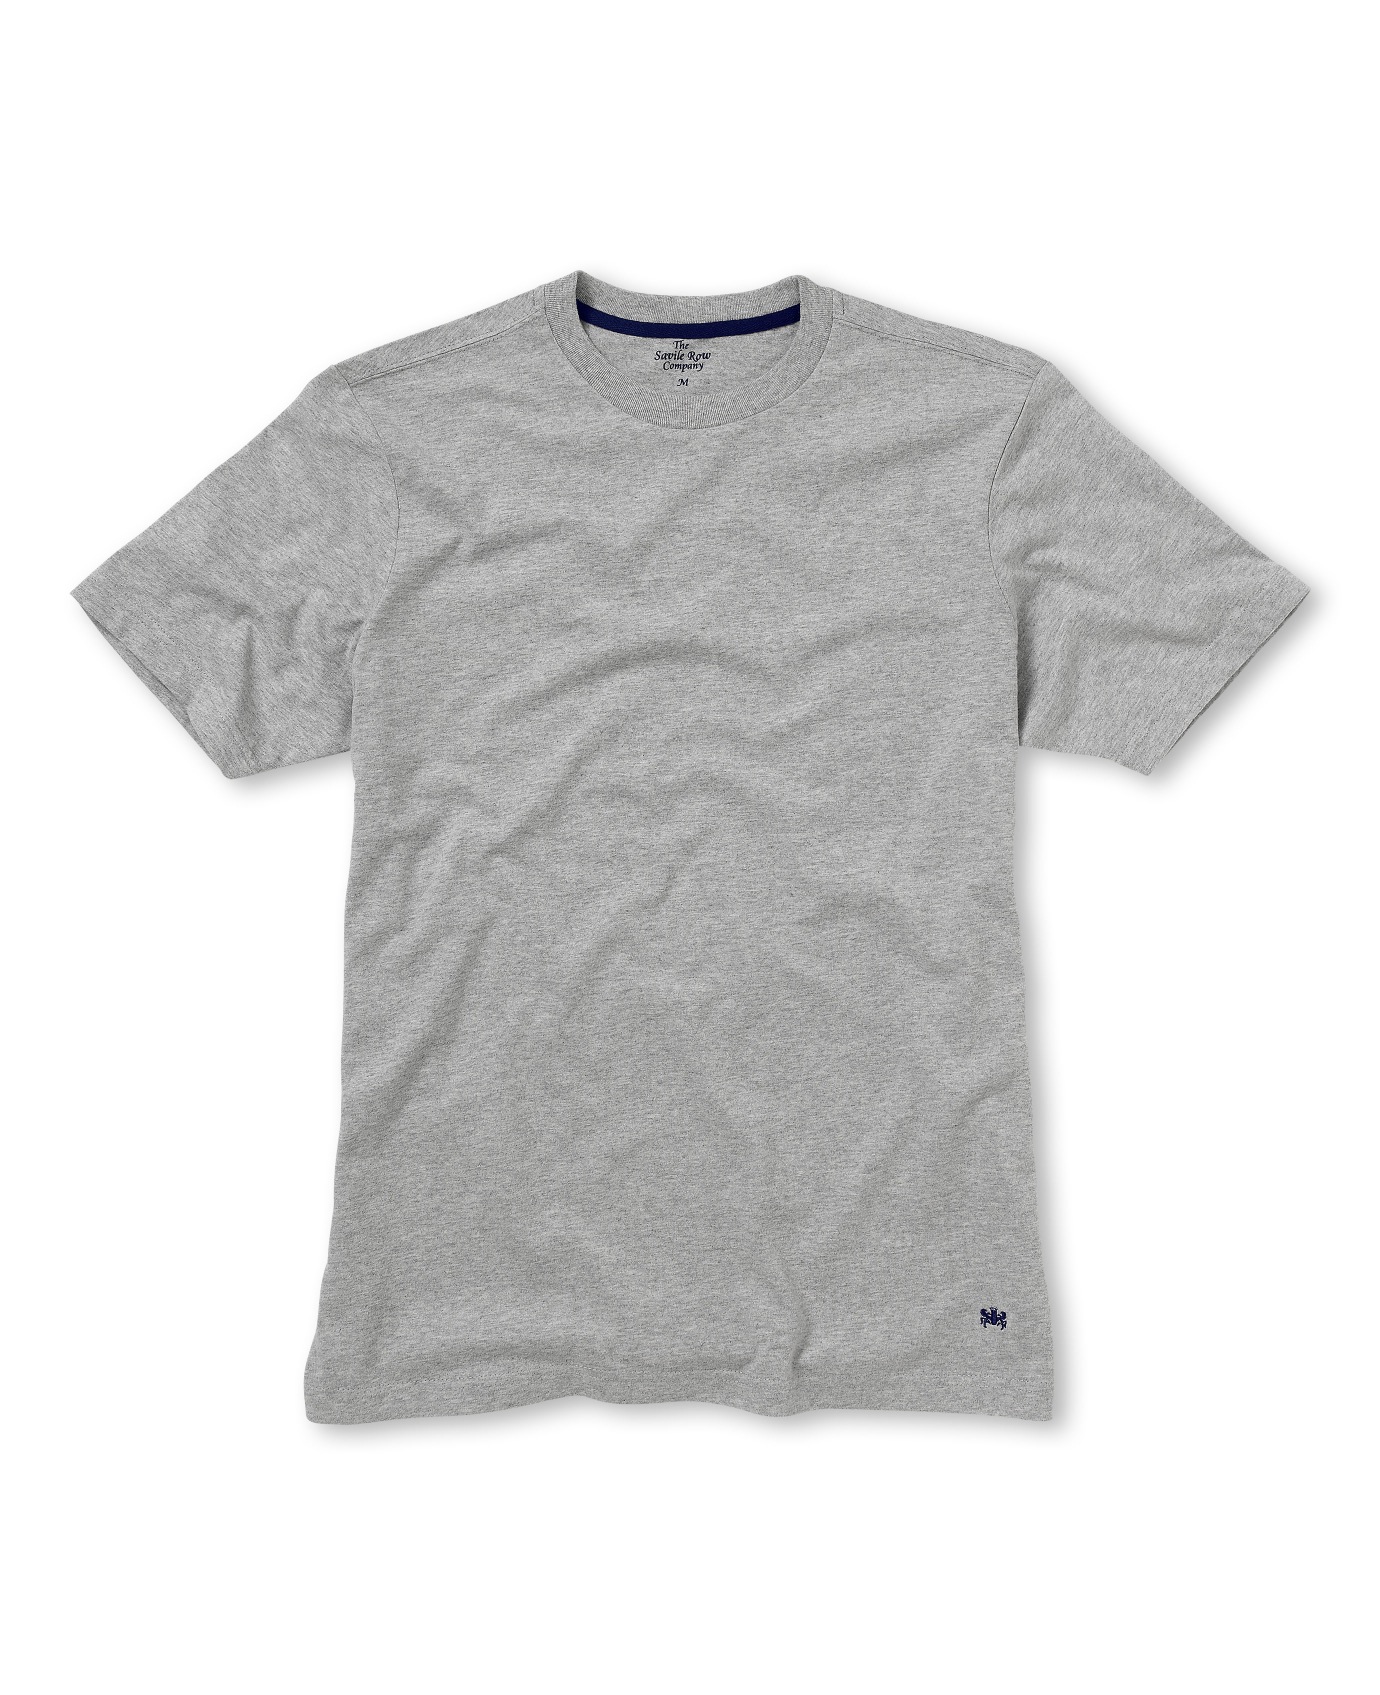 Savile Row Co. Grey Short Sleeve T-Shirt XXL